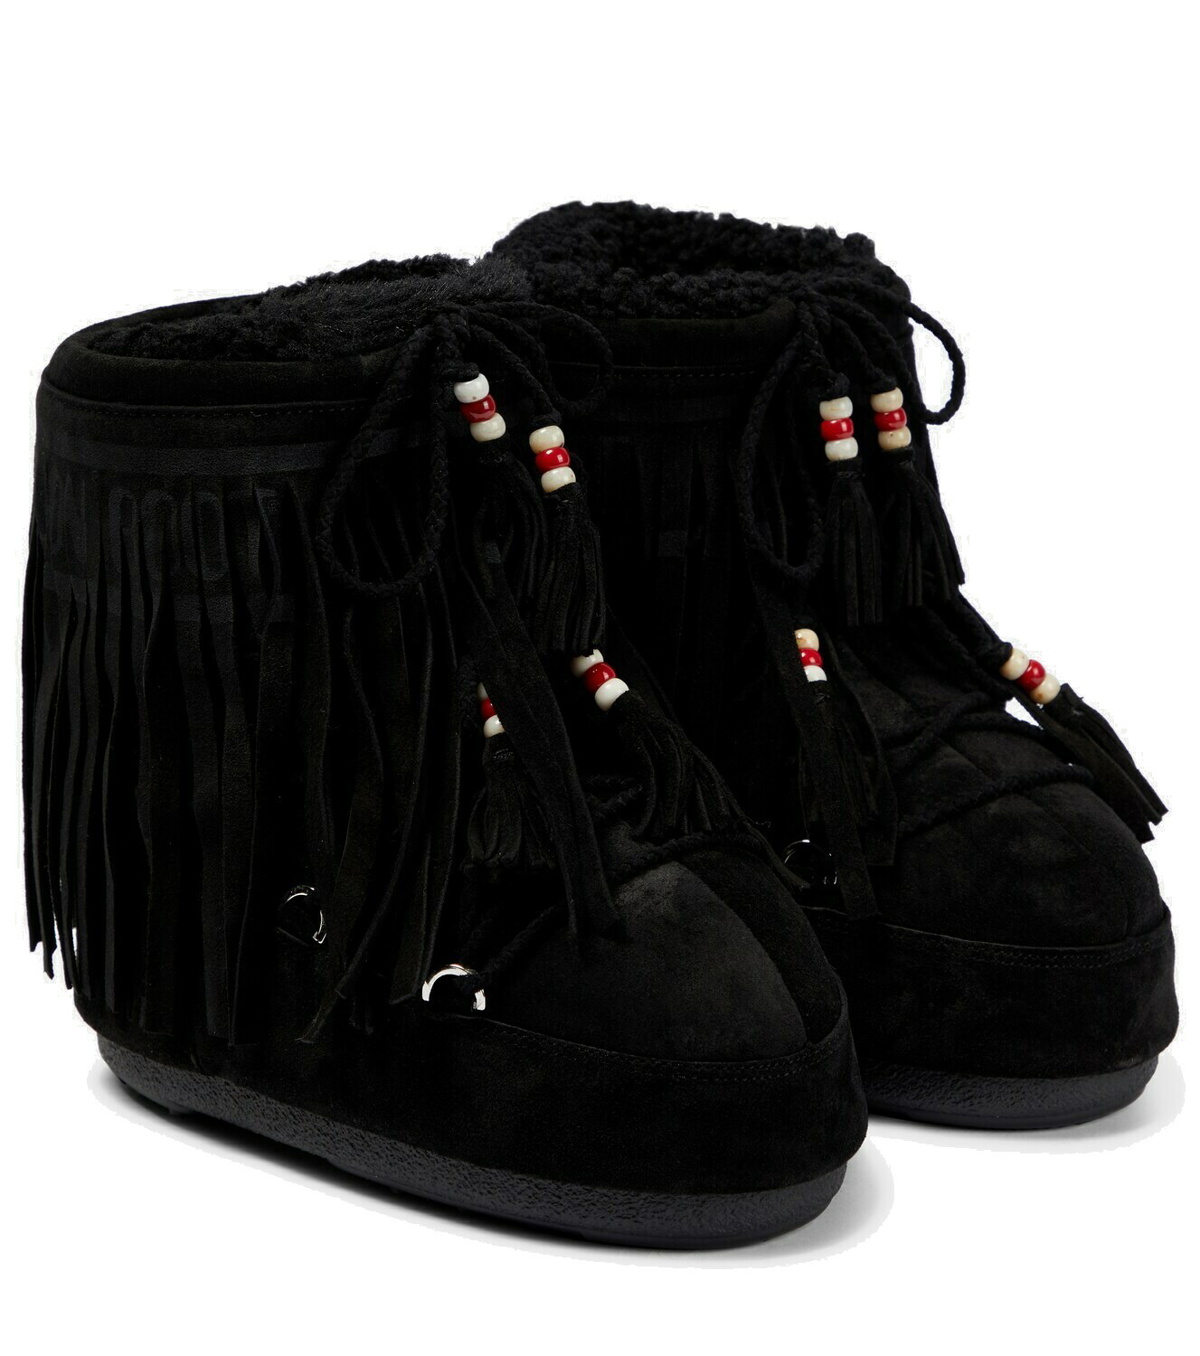 Alanui Boots moon boot Women 14052600003 Fabric Gray Black 582,56€